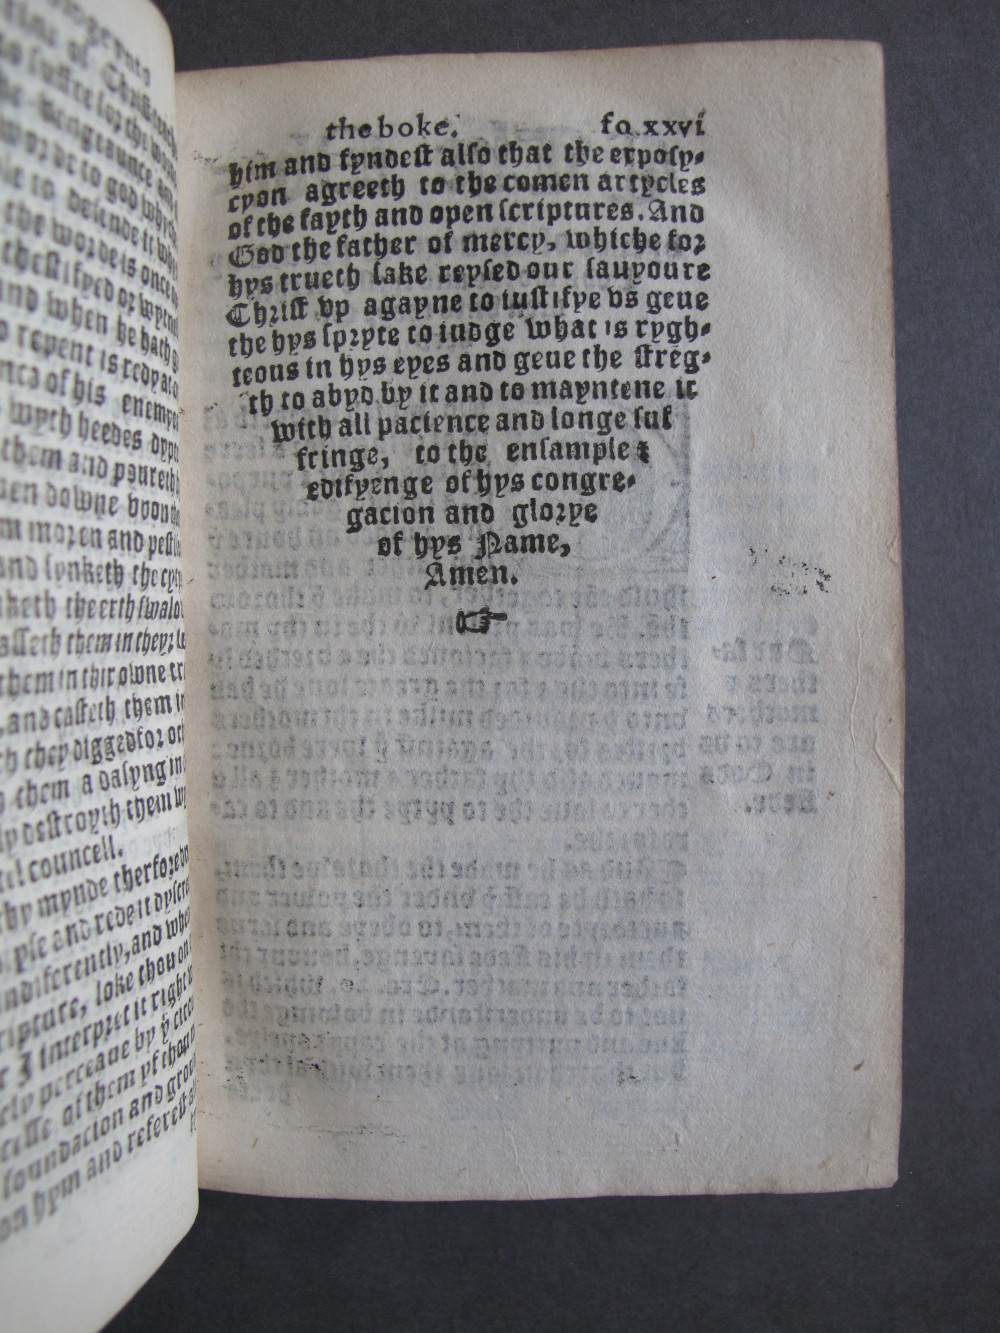 1 Folio D2 recto